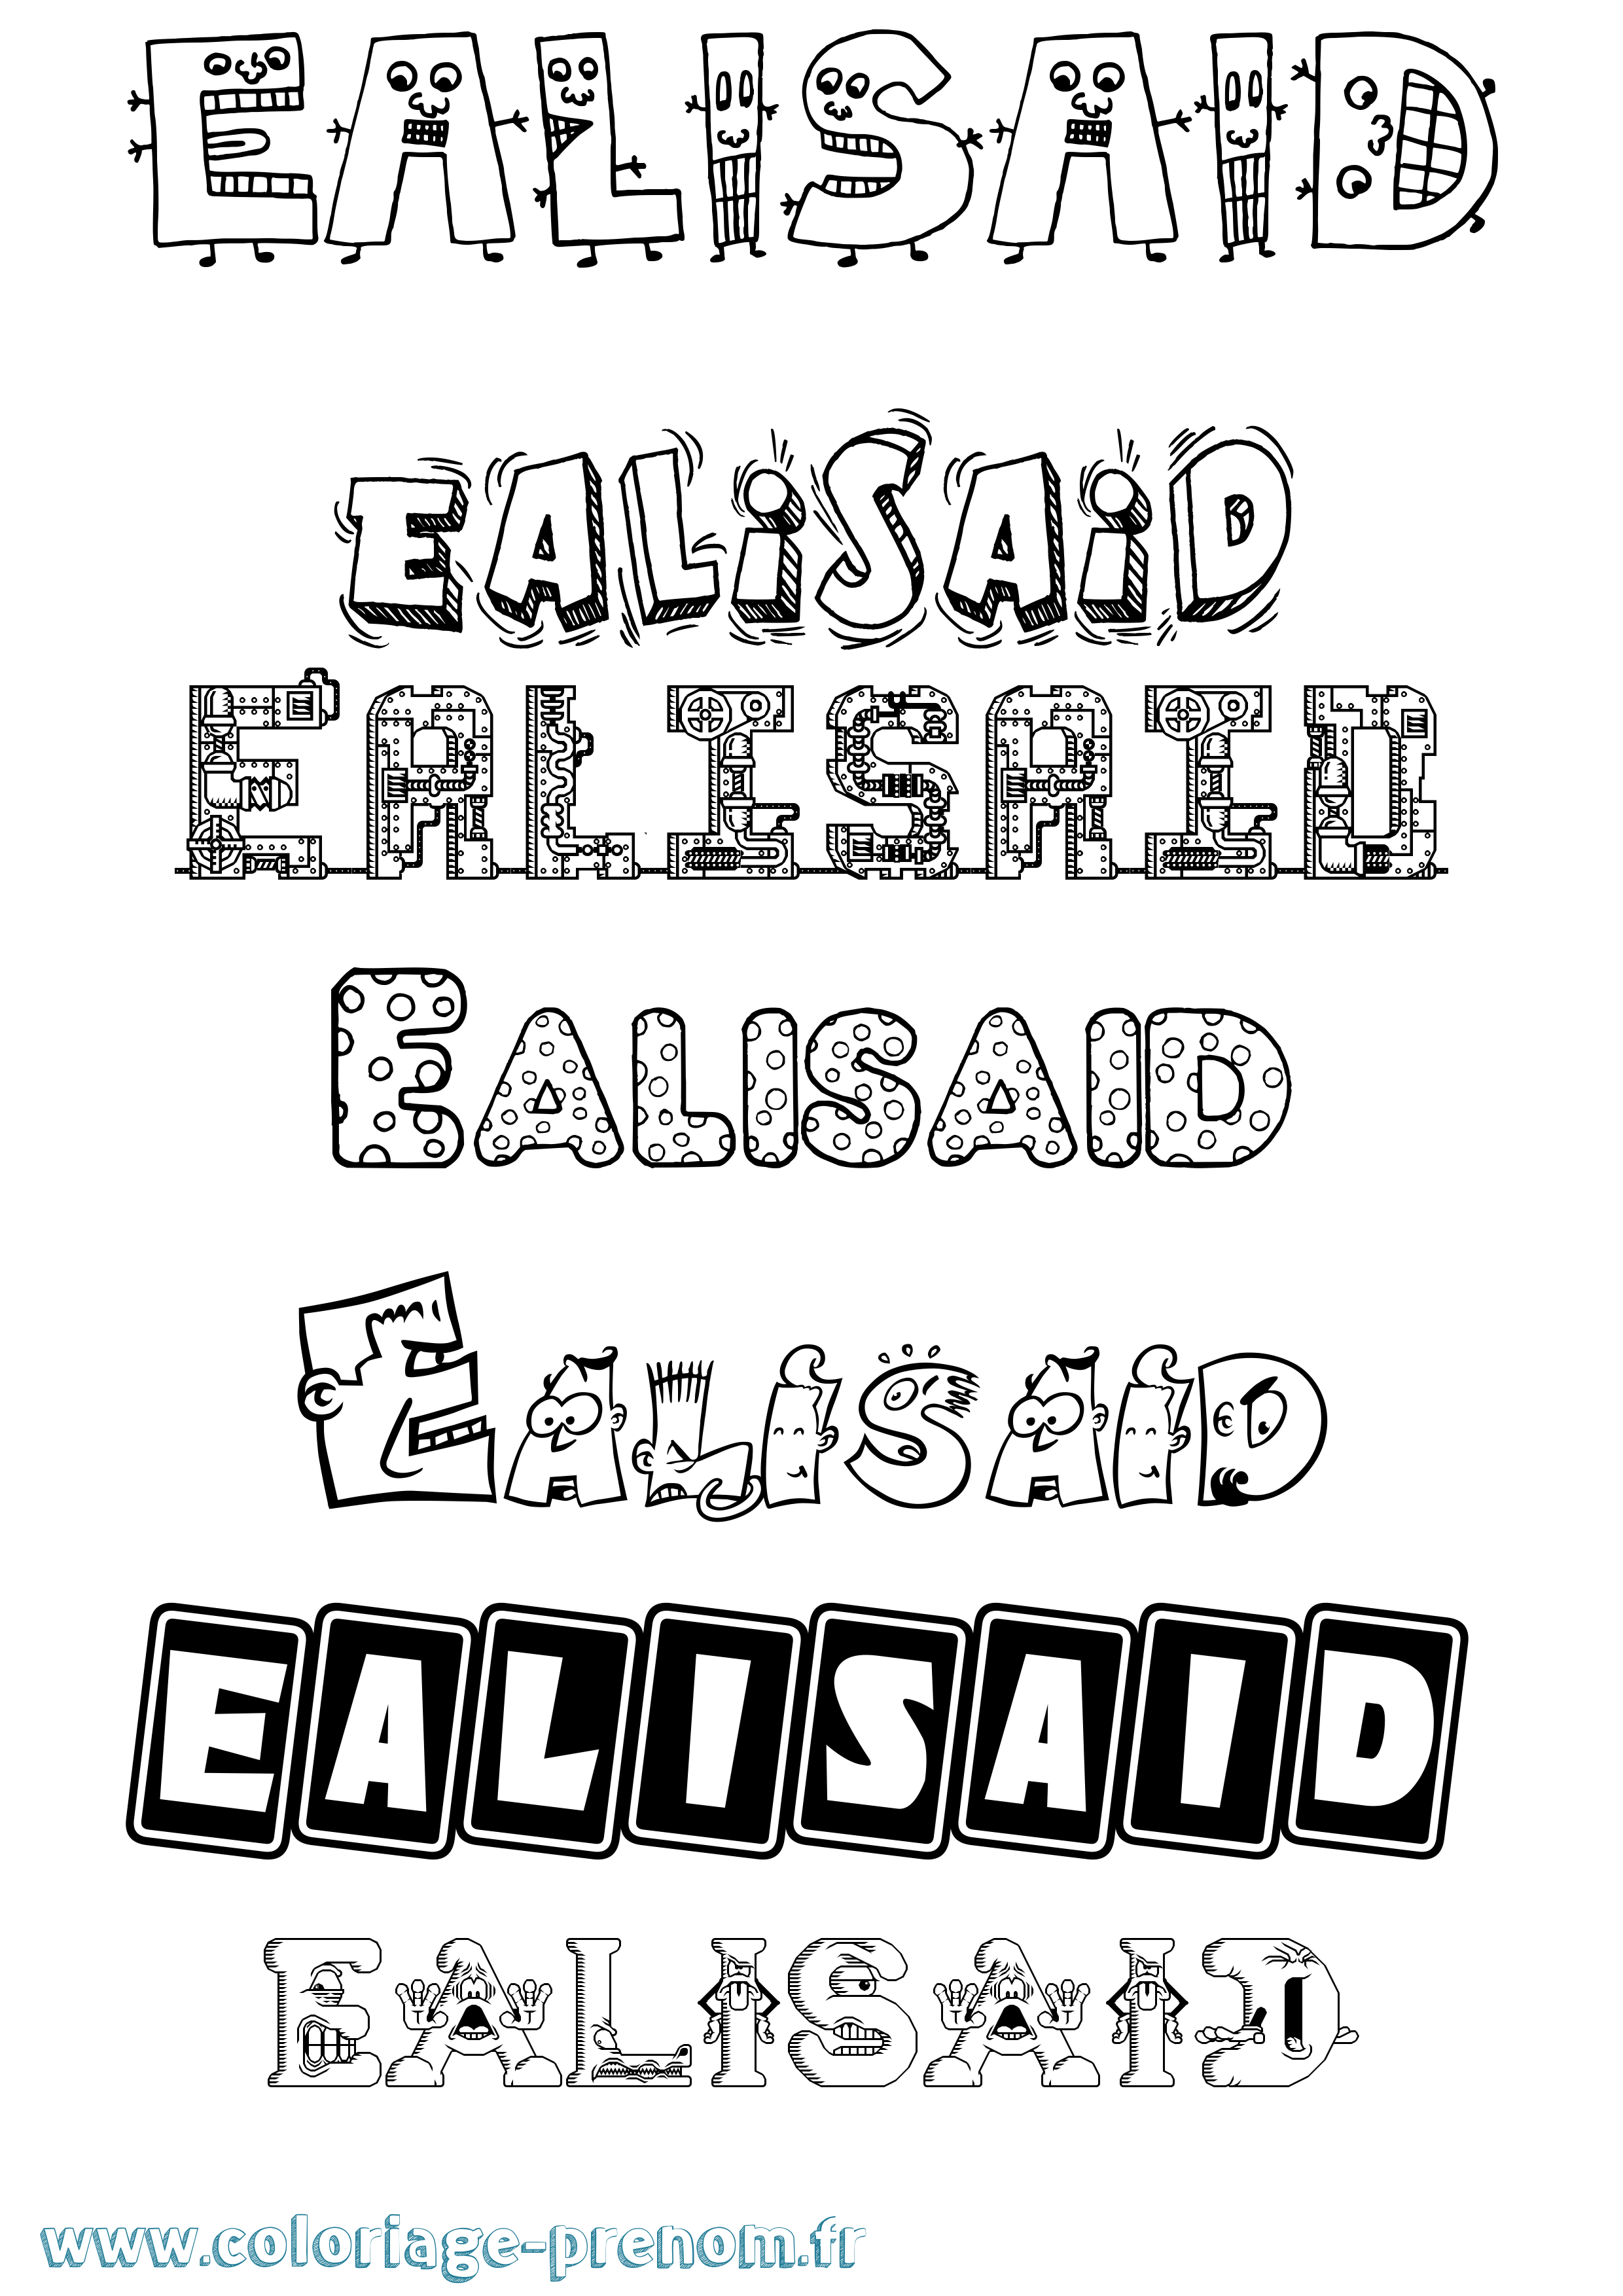 Coloriage prénom Ealisaid Fun